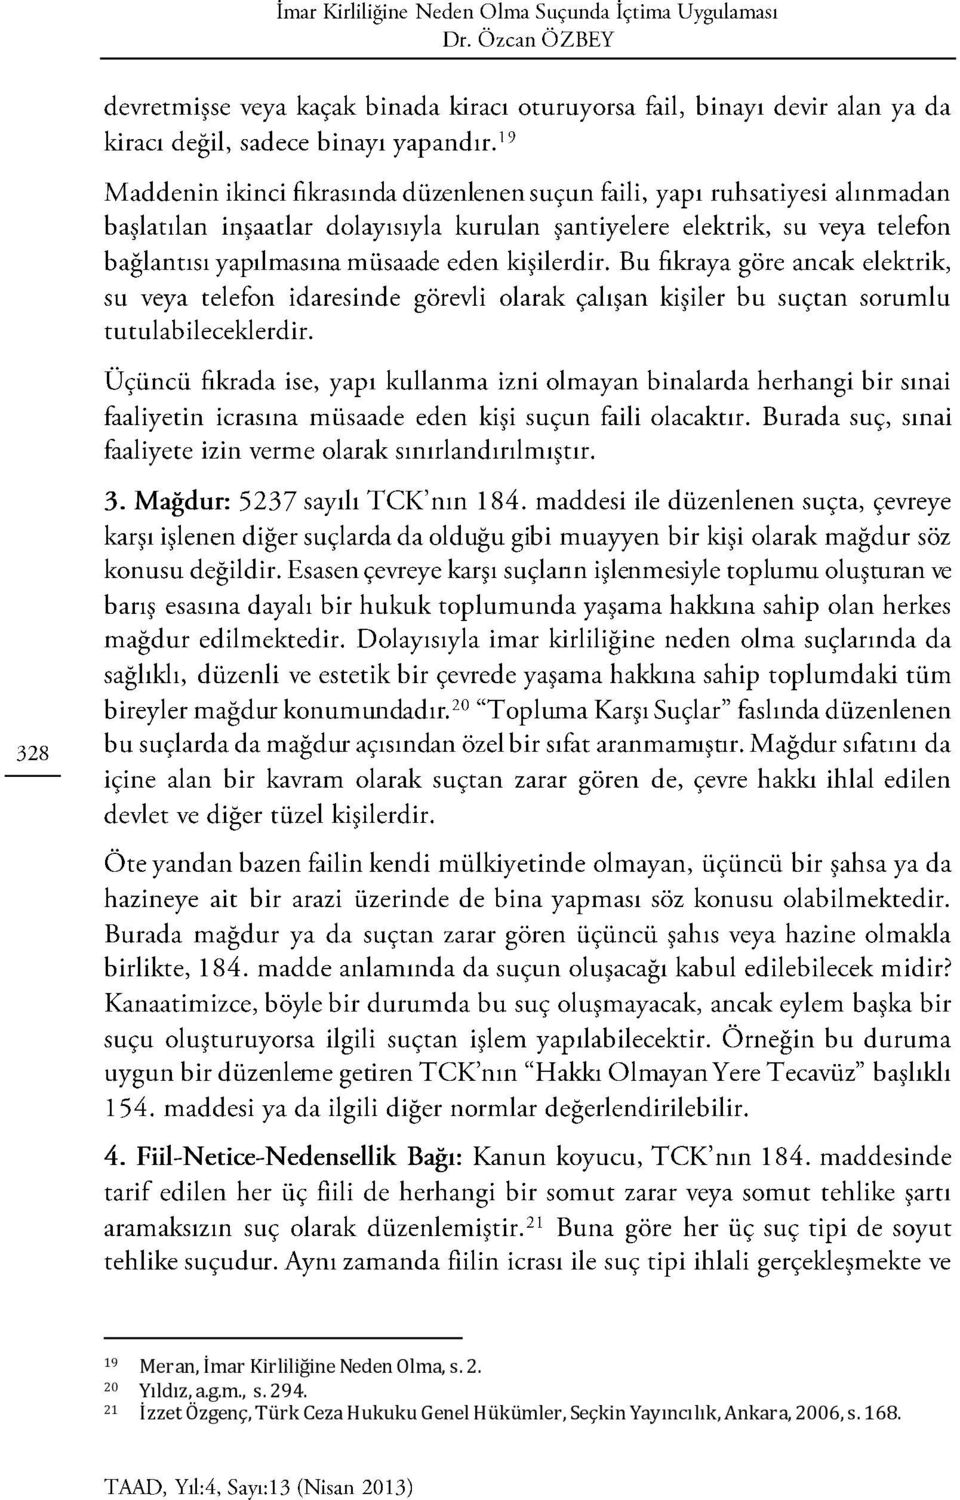 21 İzzet Özgenç, Türk Ceza Hukuku Genel